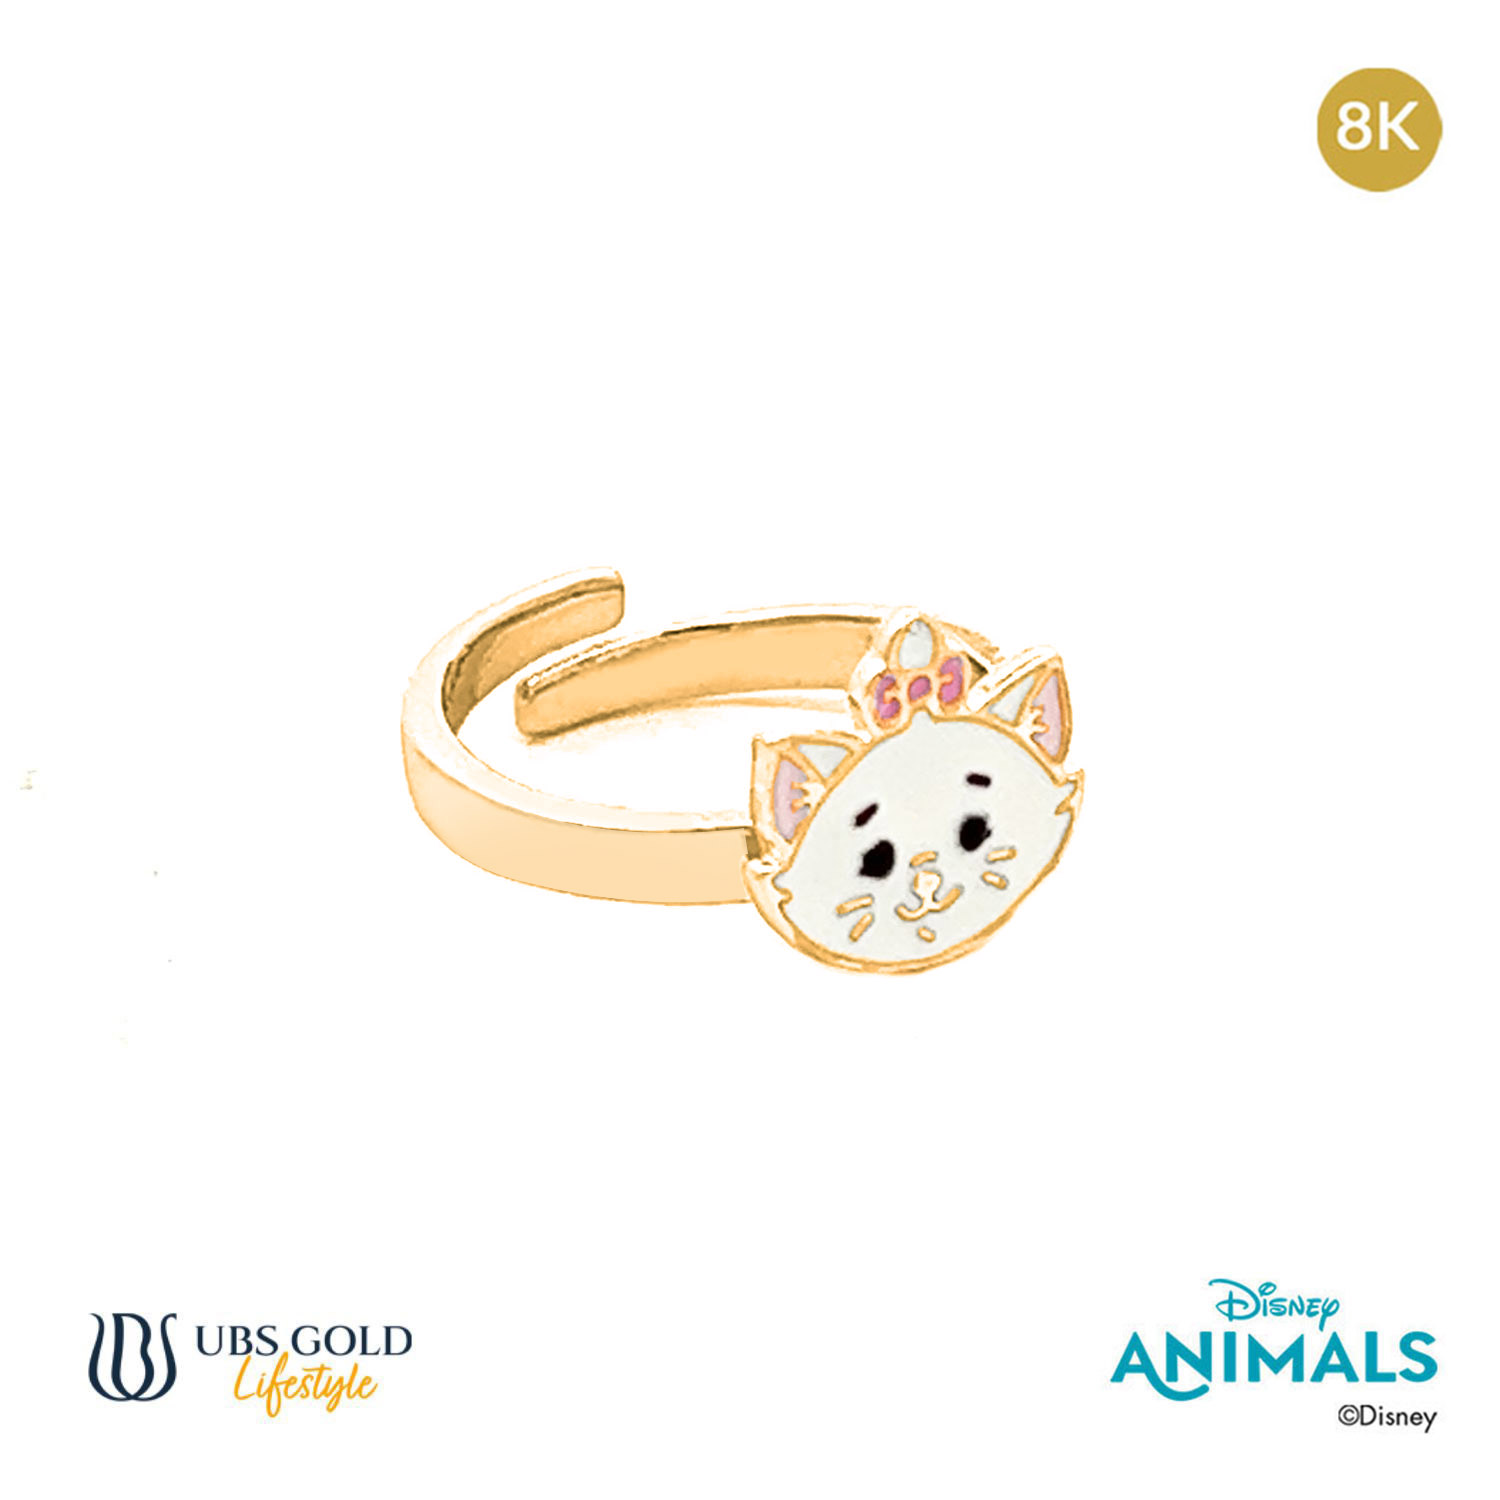 UBS Gold Cincin Emas Bayi Disney Animals - Cny0040K - 8K